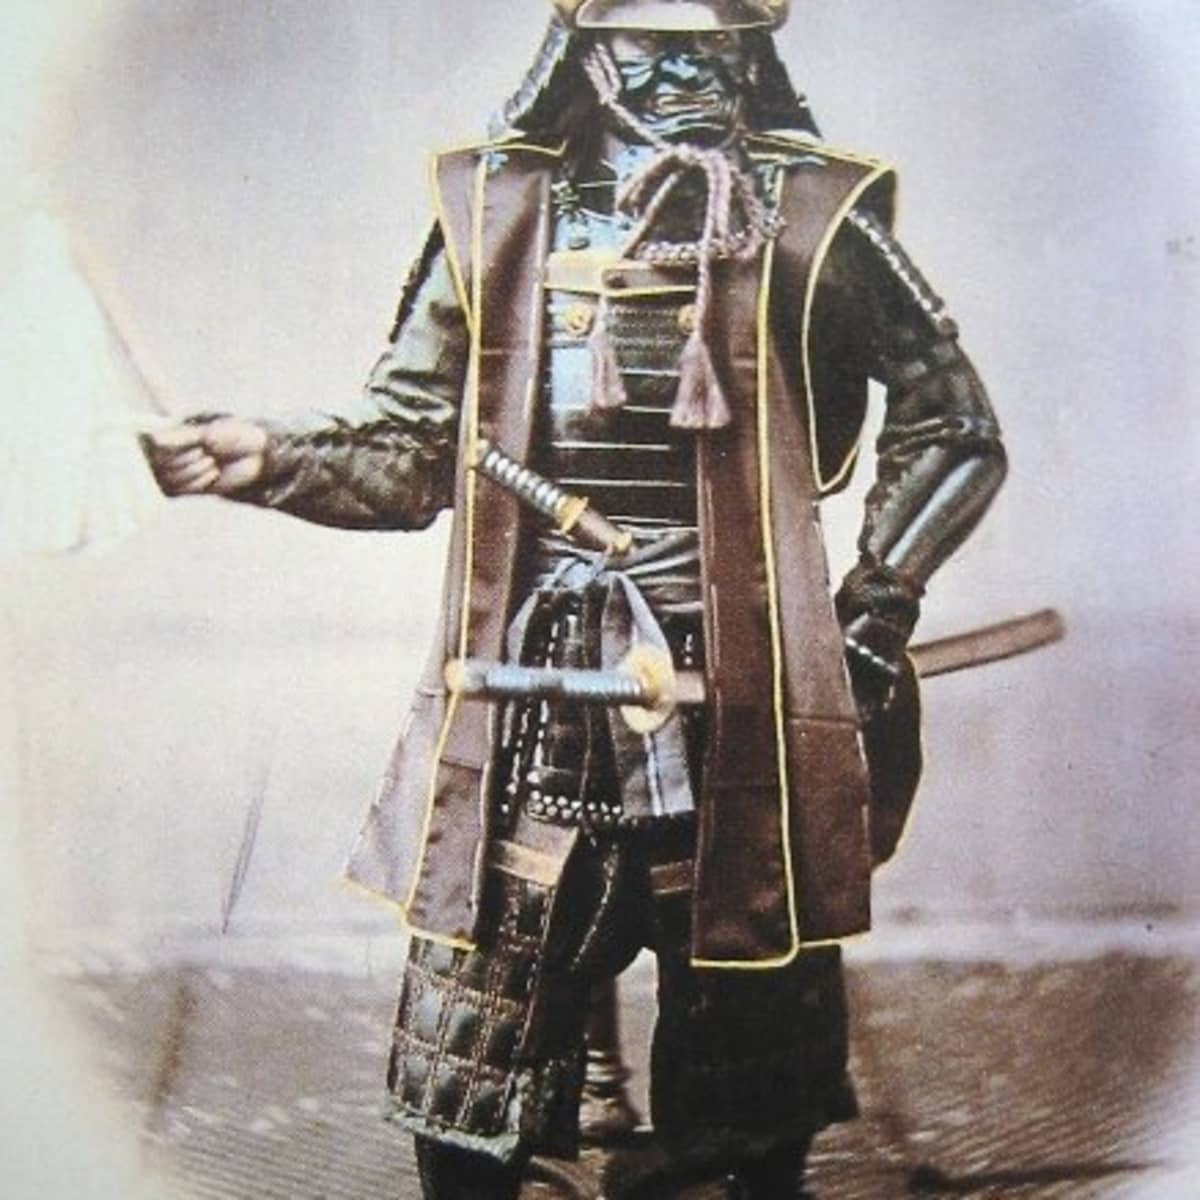 samurai and knights similarities essay